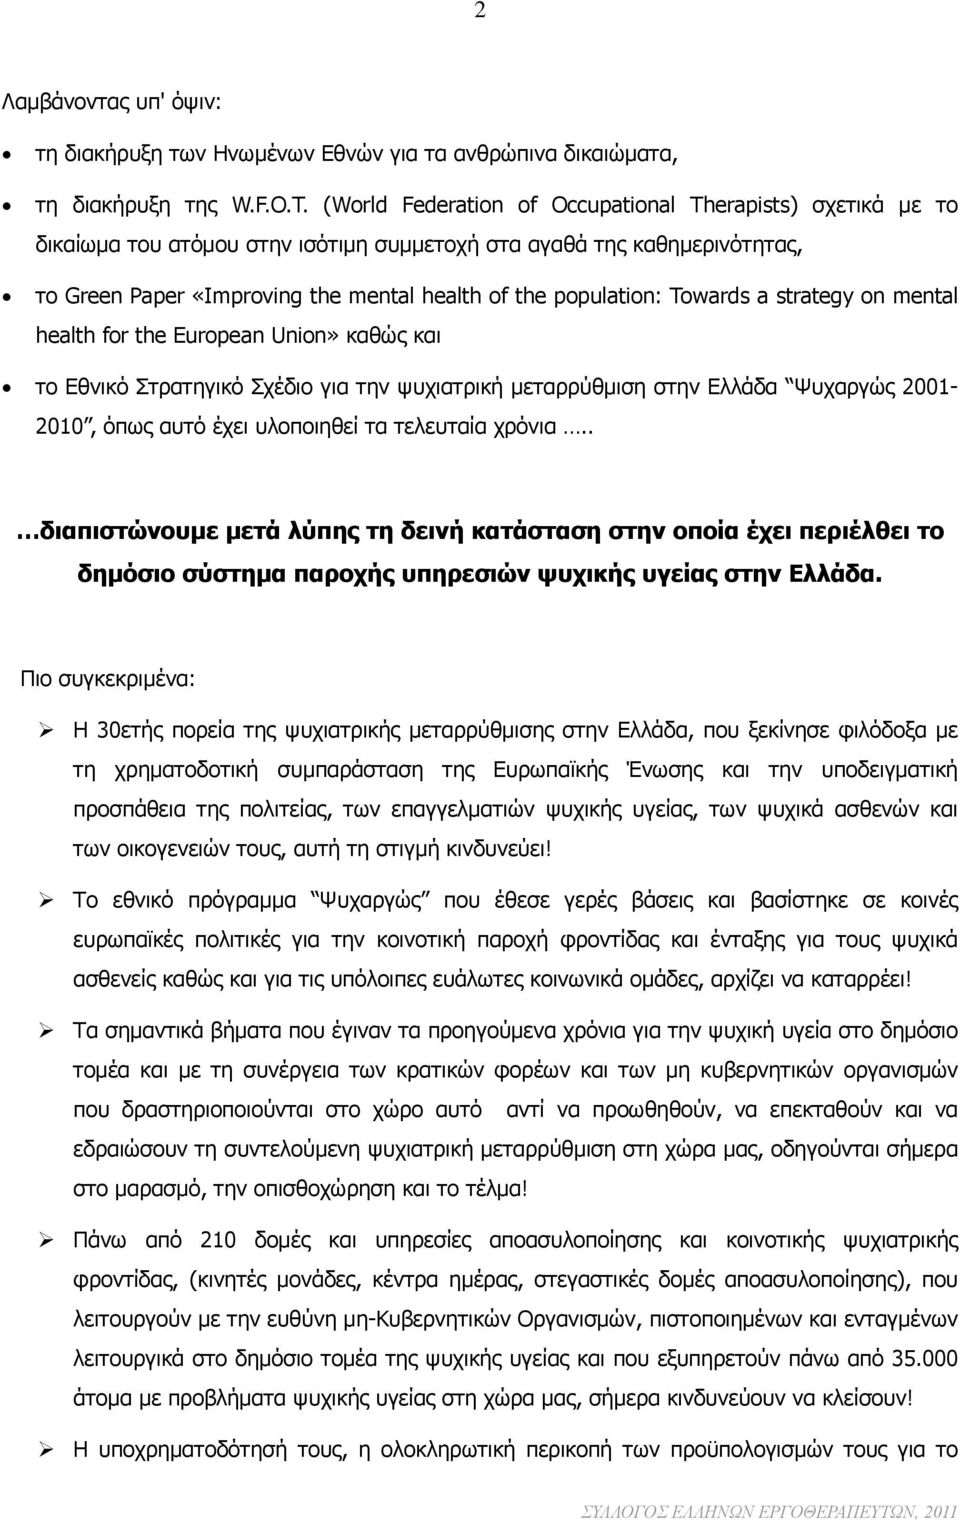 Towards a strategy on mental health for the European Union» καθώς και το Εθνικό Στρατηγικό Σχέδιο για την ψυχιατρική μεταρρύθμιση στην Ελλάδα Ψυχαργώς 2001-2010, όπως αυτό έχει υλοποιηθεί τα